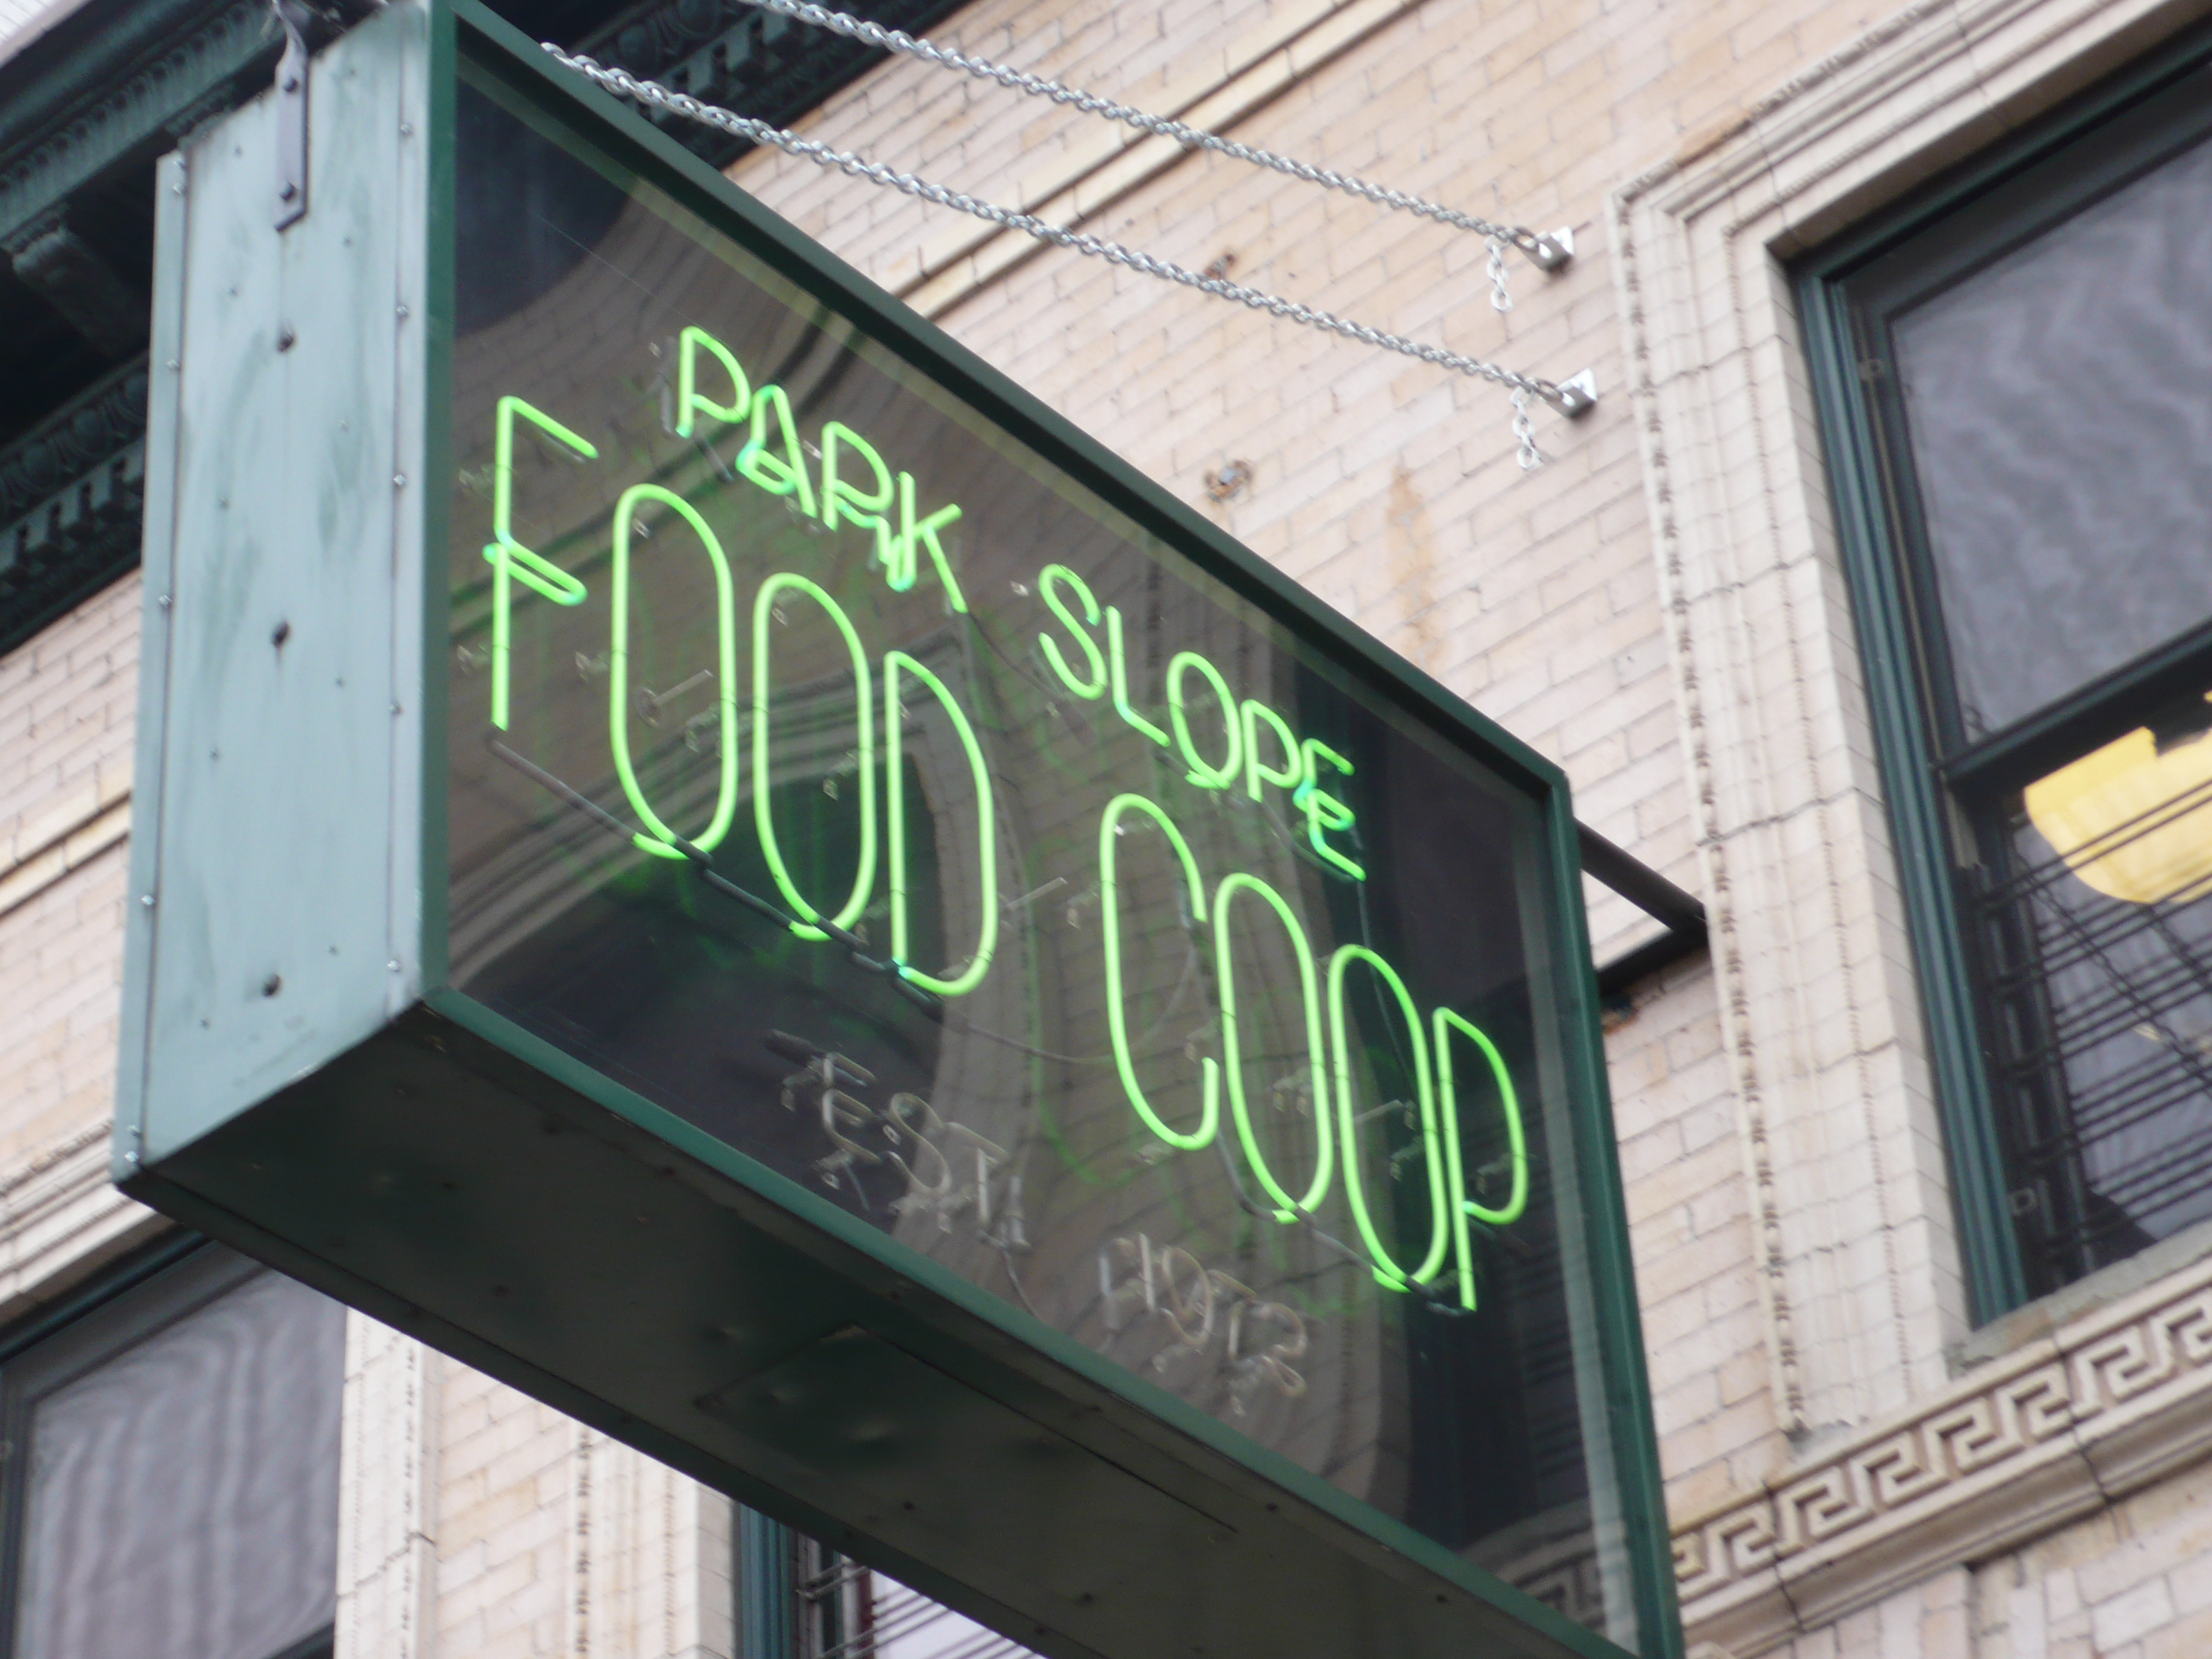 Park Slope Food Coop